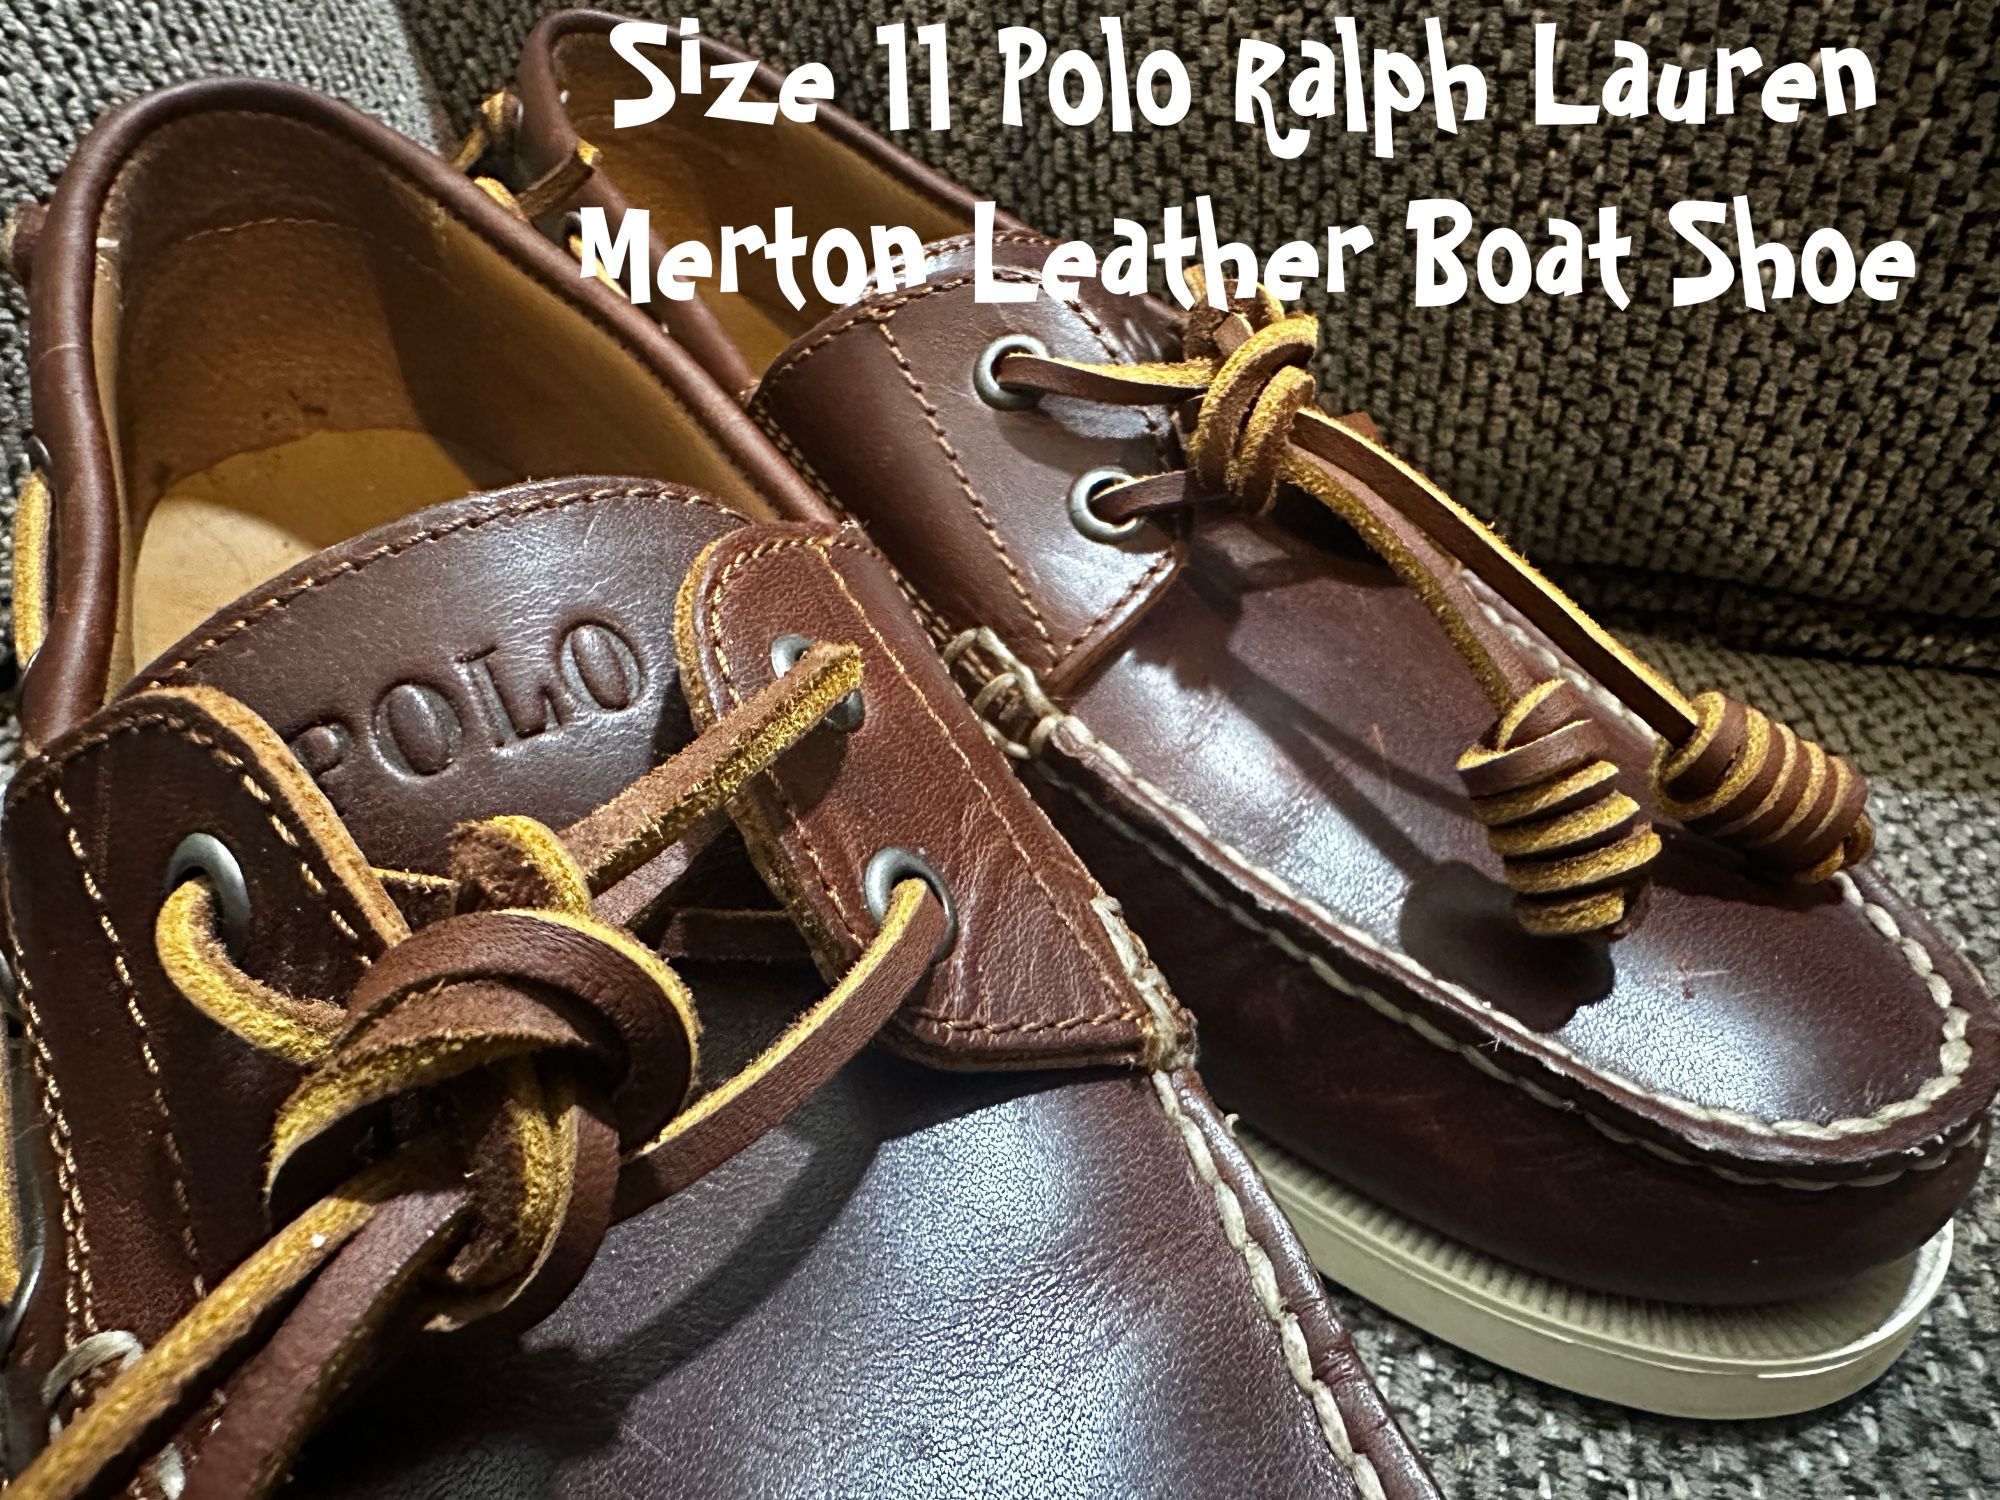 Polo Ralph Lauren Merton Leather Boat Shoe